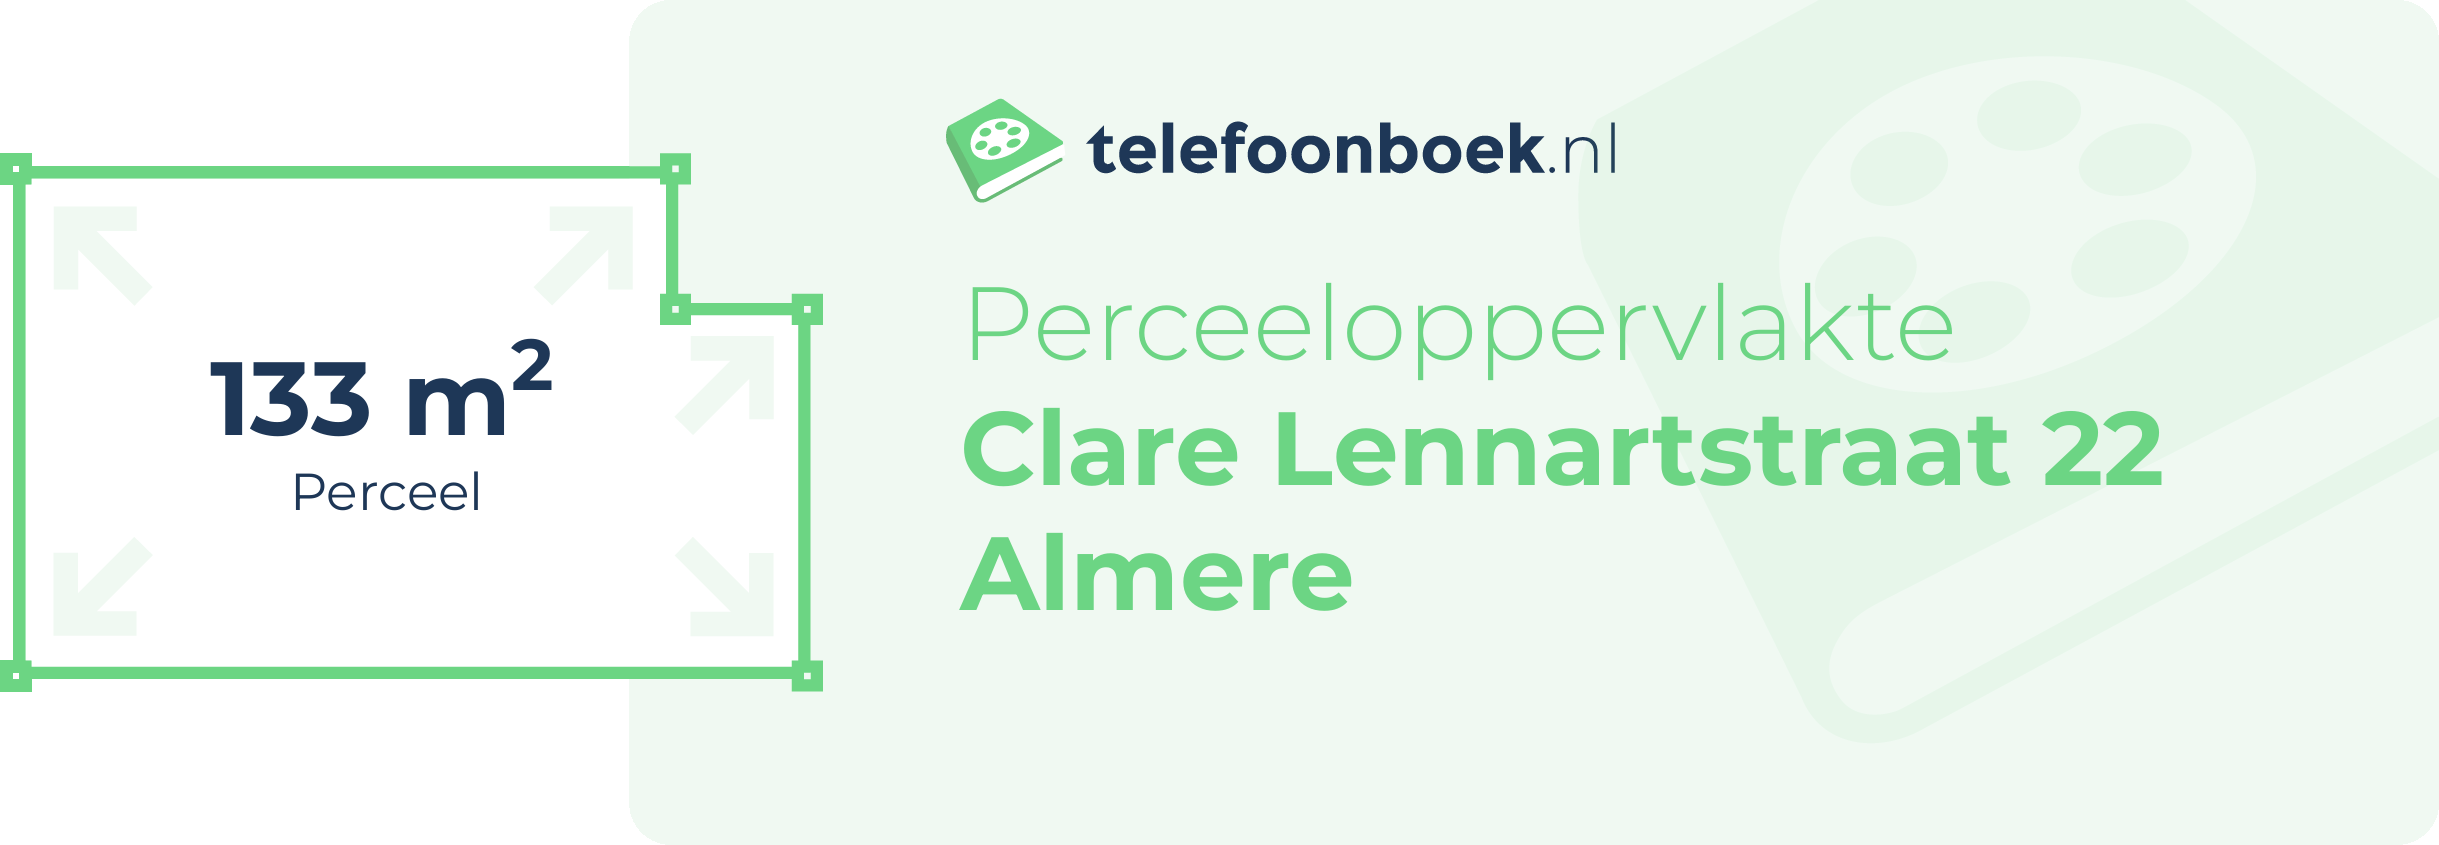 Perceeloppervlakte Clare Lennartstraat 22 Almere